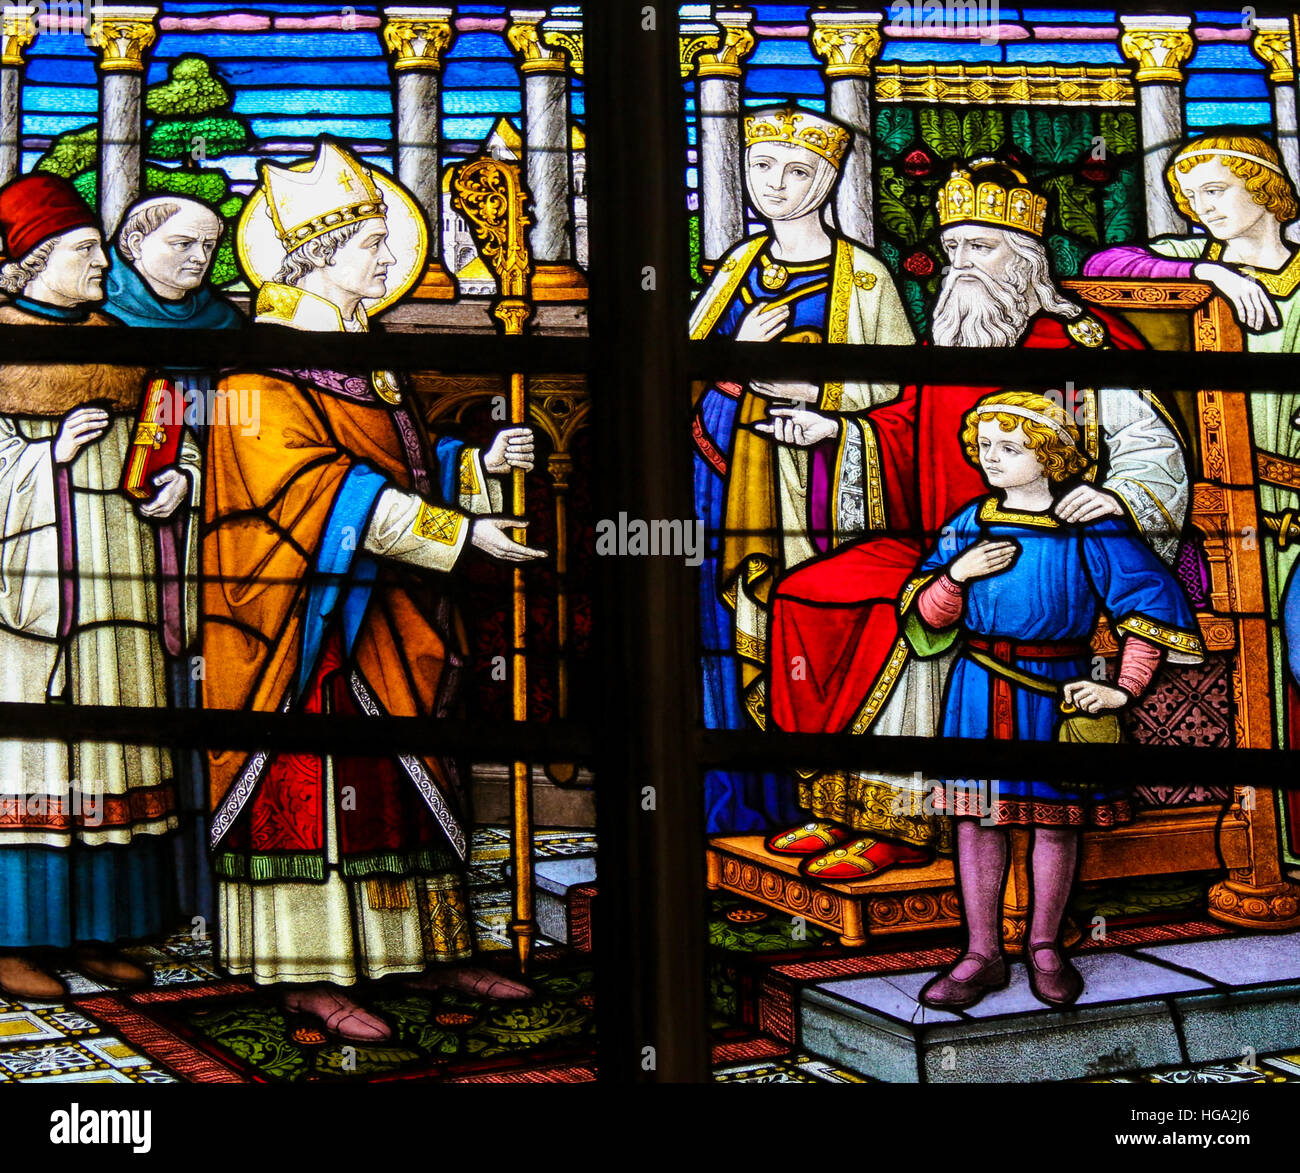 Stained Glass depicting Saint Lambert or Lambertus of Maastricht, in Mechelen Cathedral, Belgium. Stock Photo